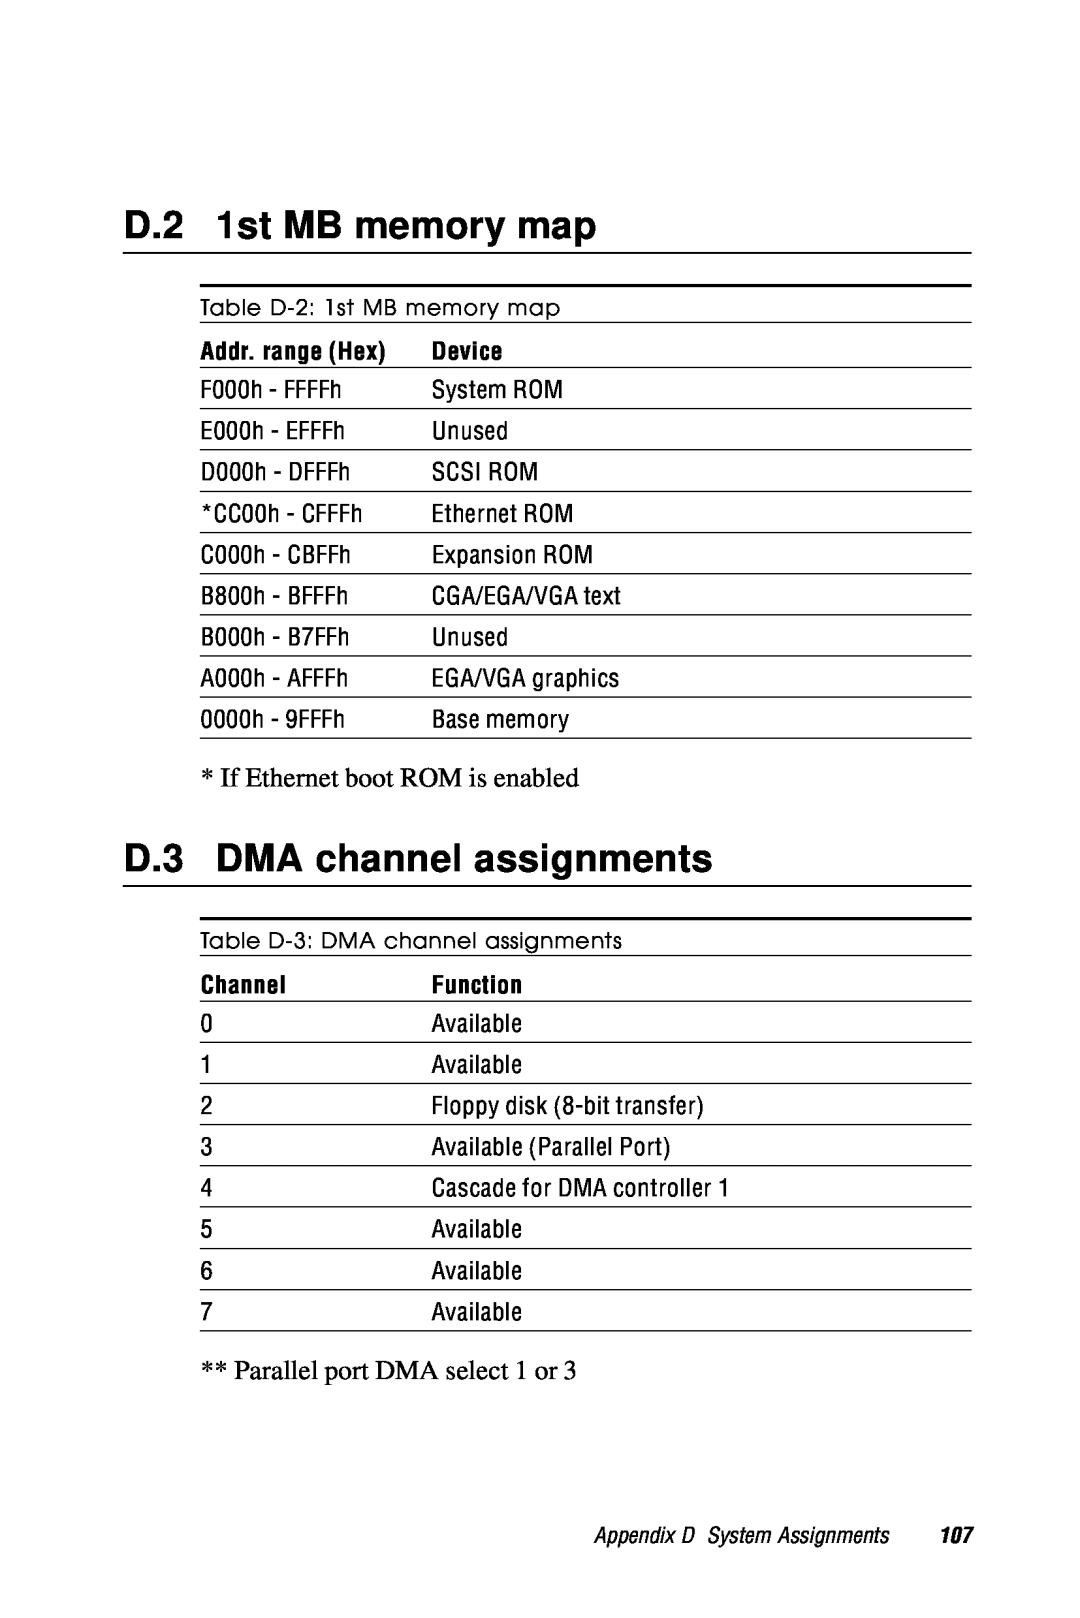 Advantech 2006957006 5th Edition D.2 1st MB memory map, D.3 DMA channel assignments, Addr. range Hex, Device, Channel 